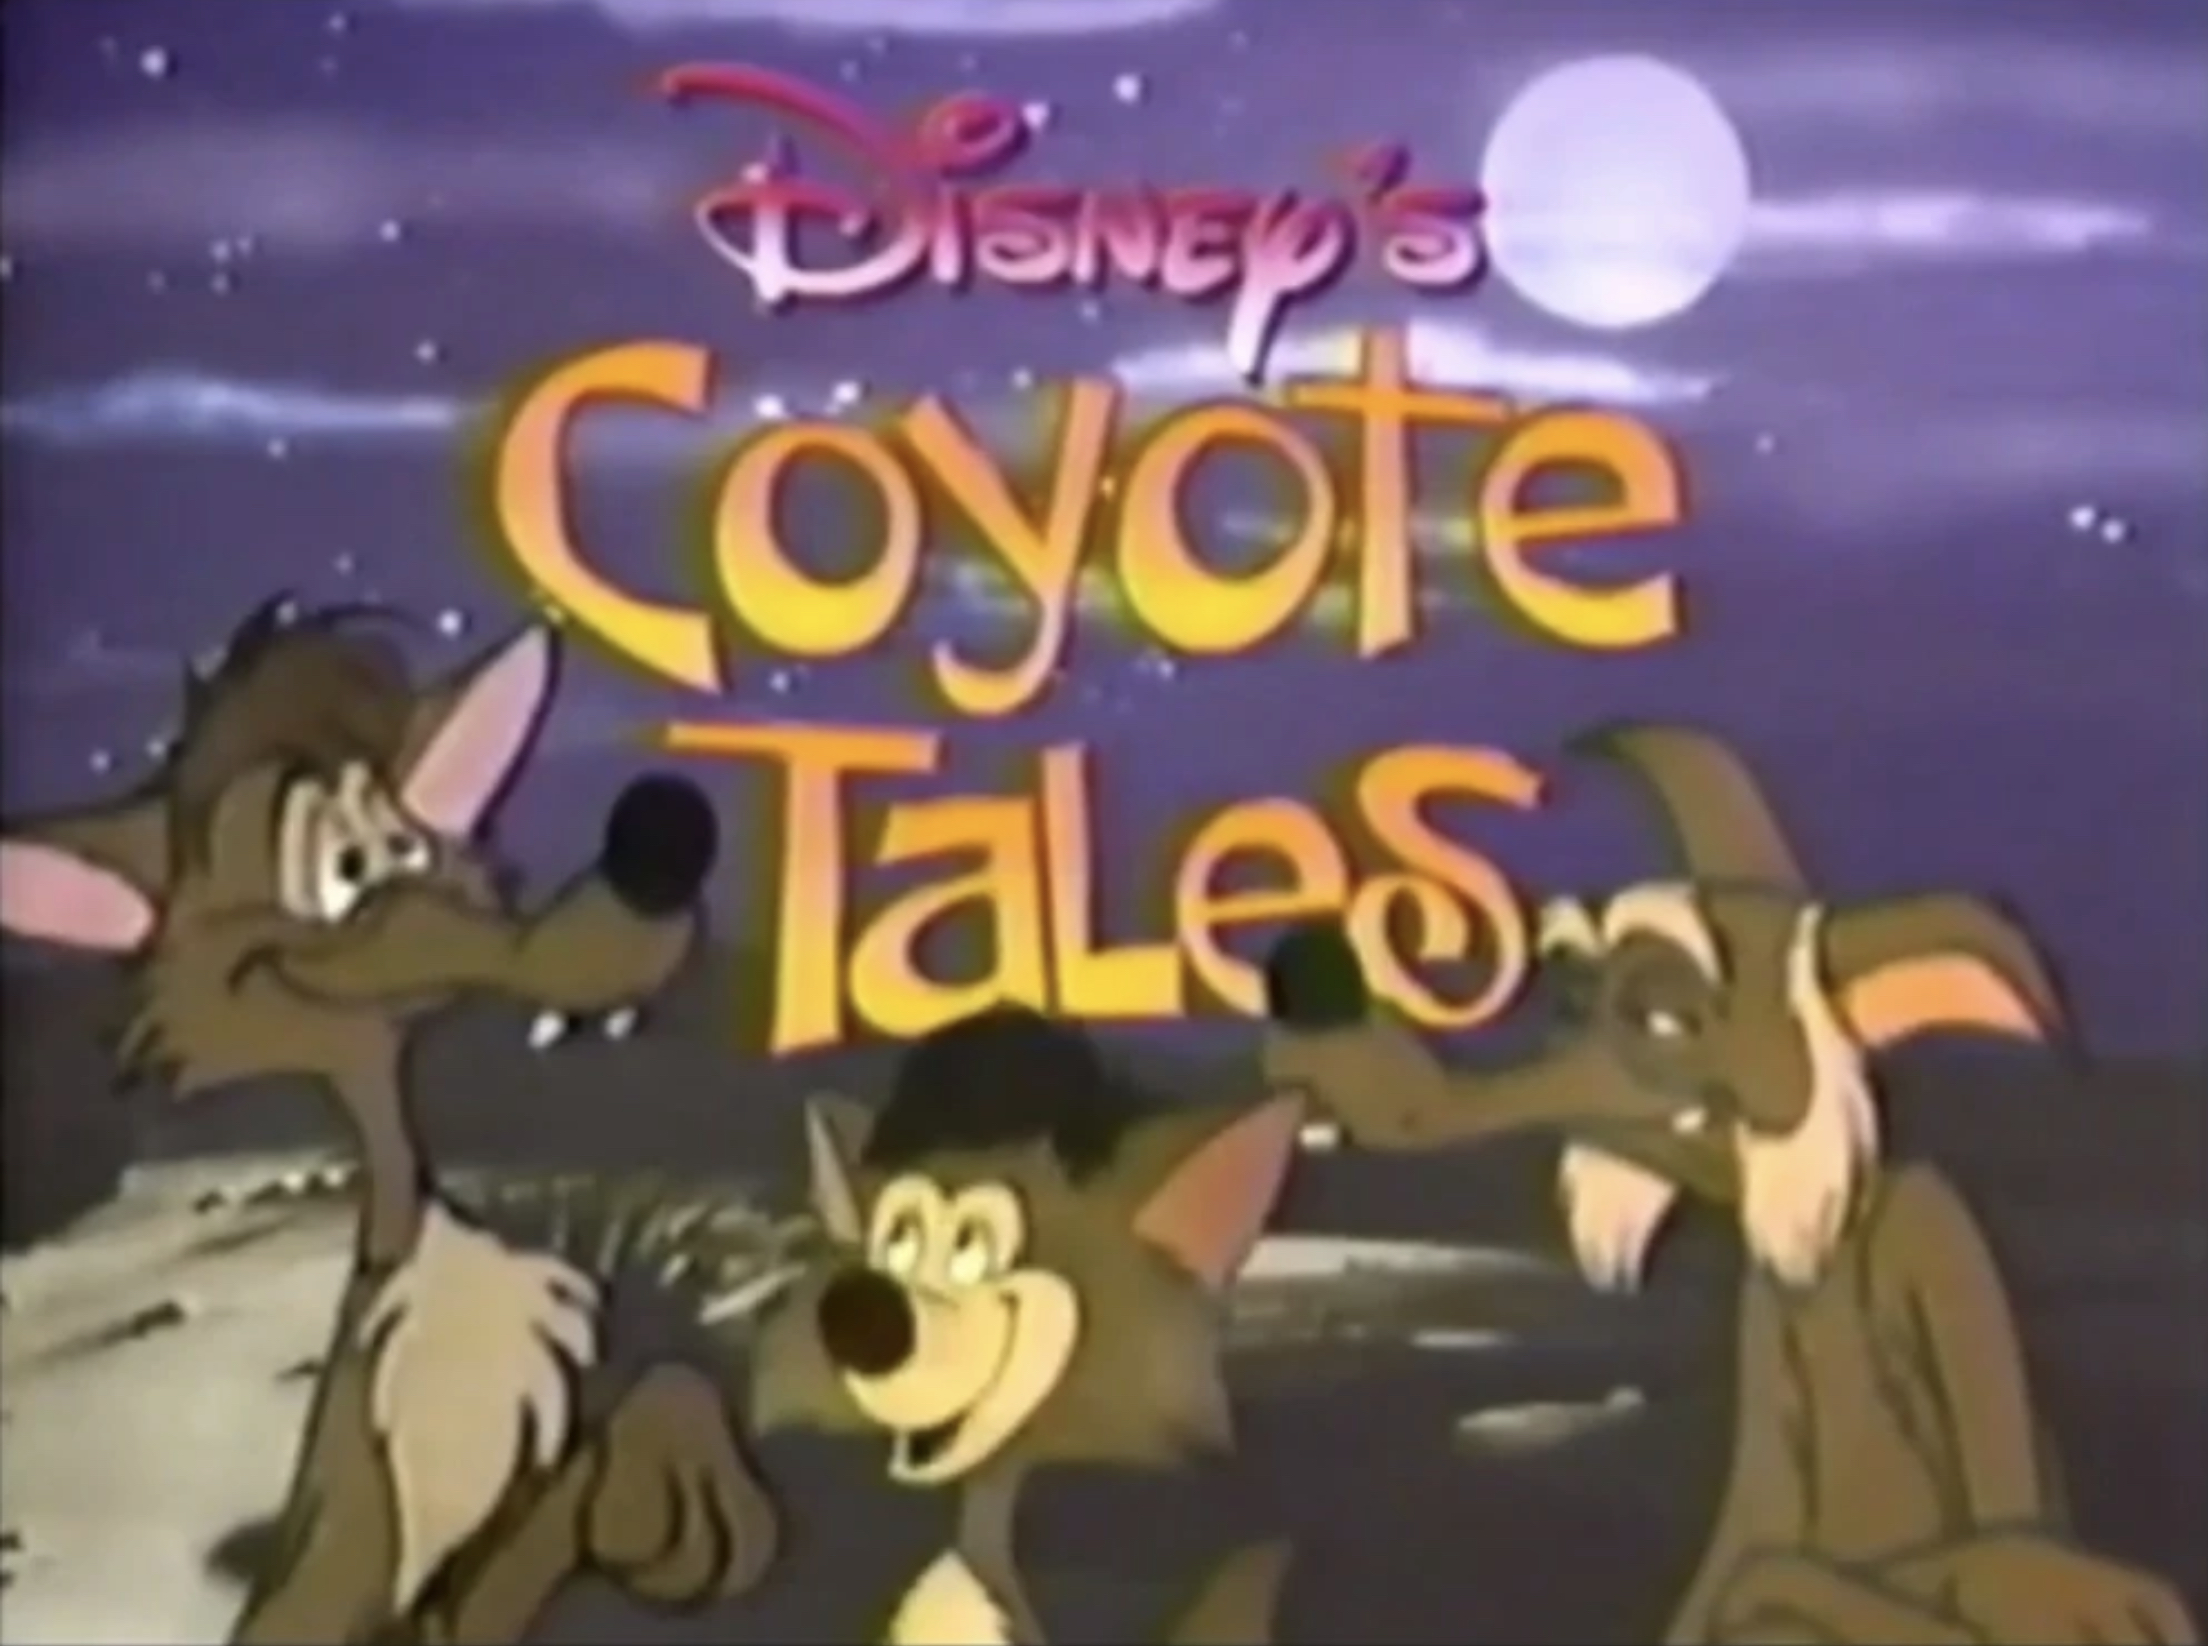 Disney’s coyote tales title.jpeg